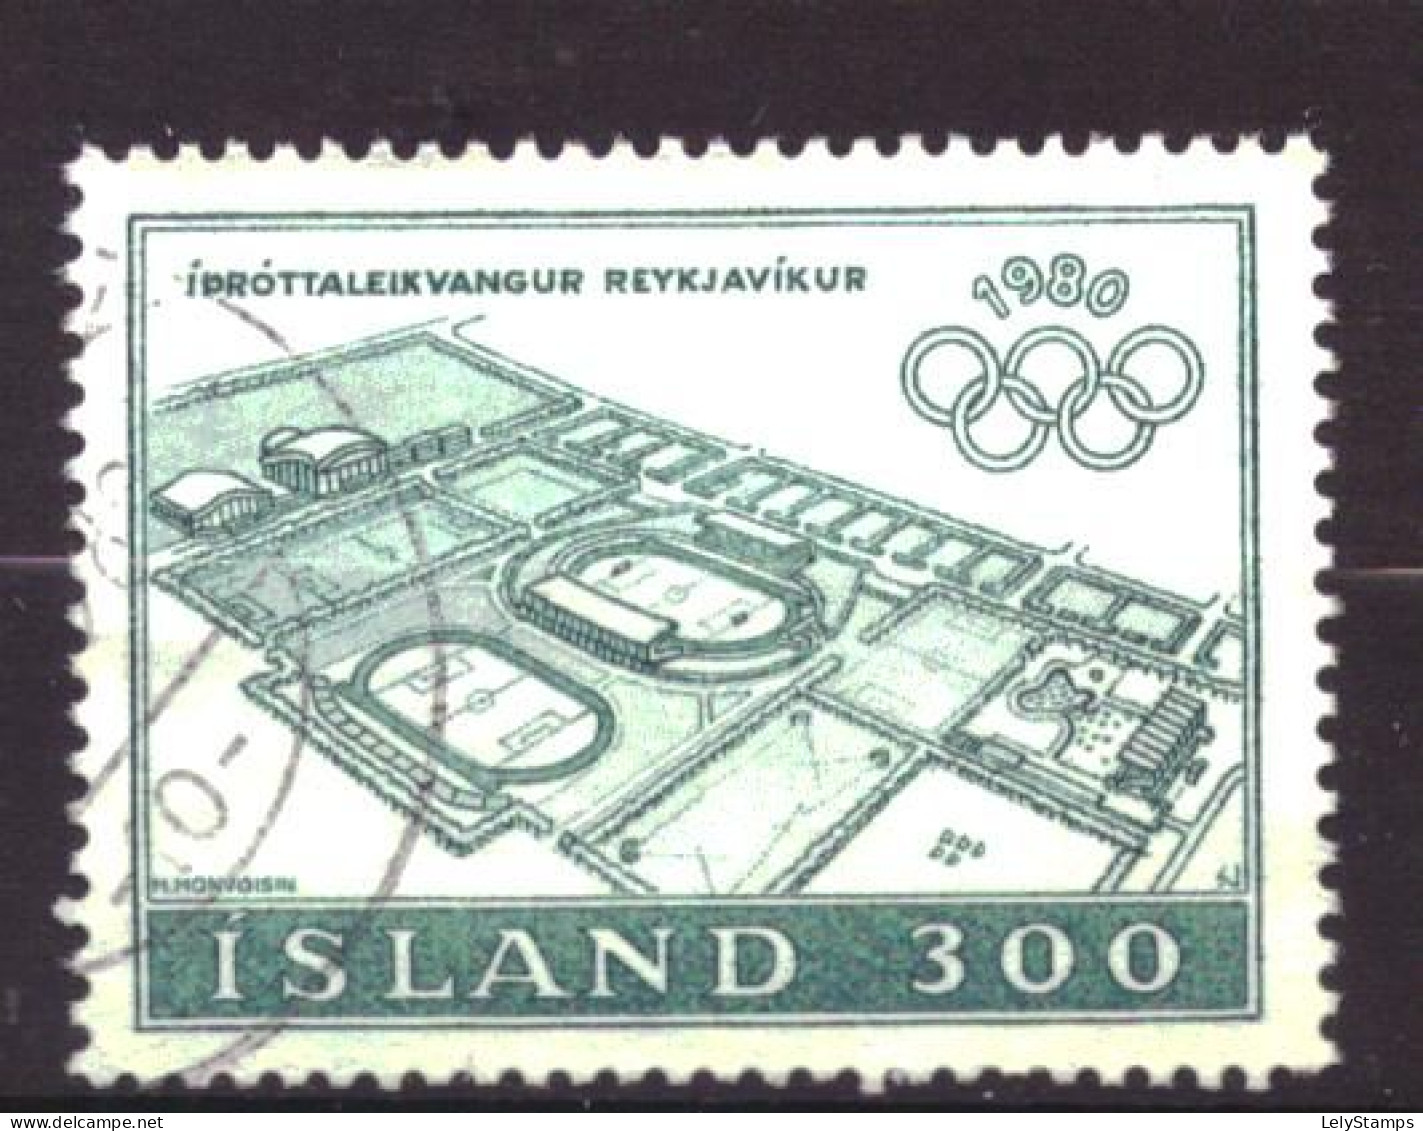 IJsland / Iceland / Island 555 Used Olympics Sports (1980) - Gebraucht